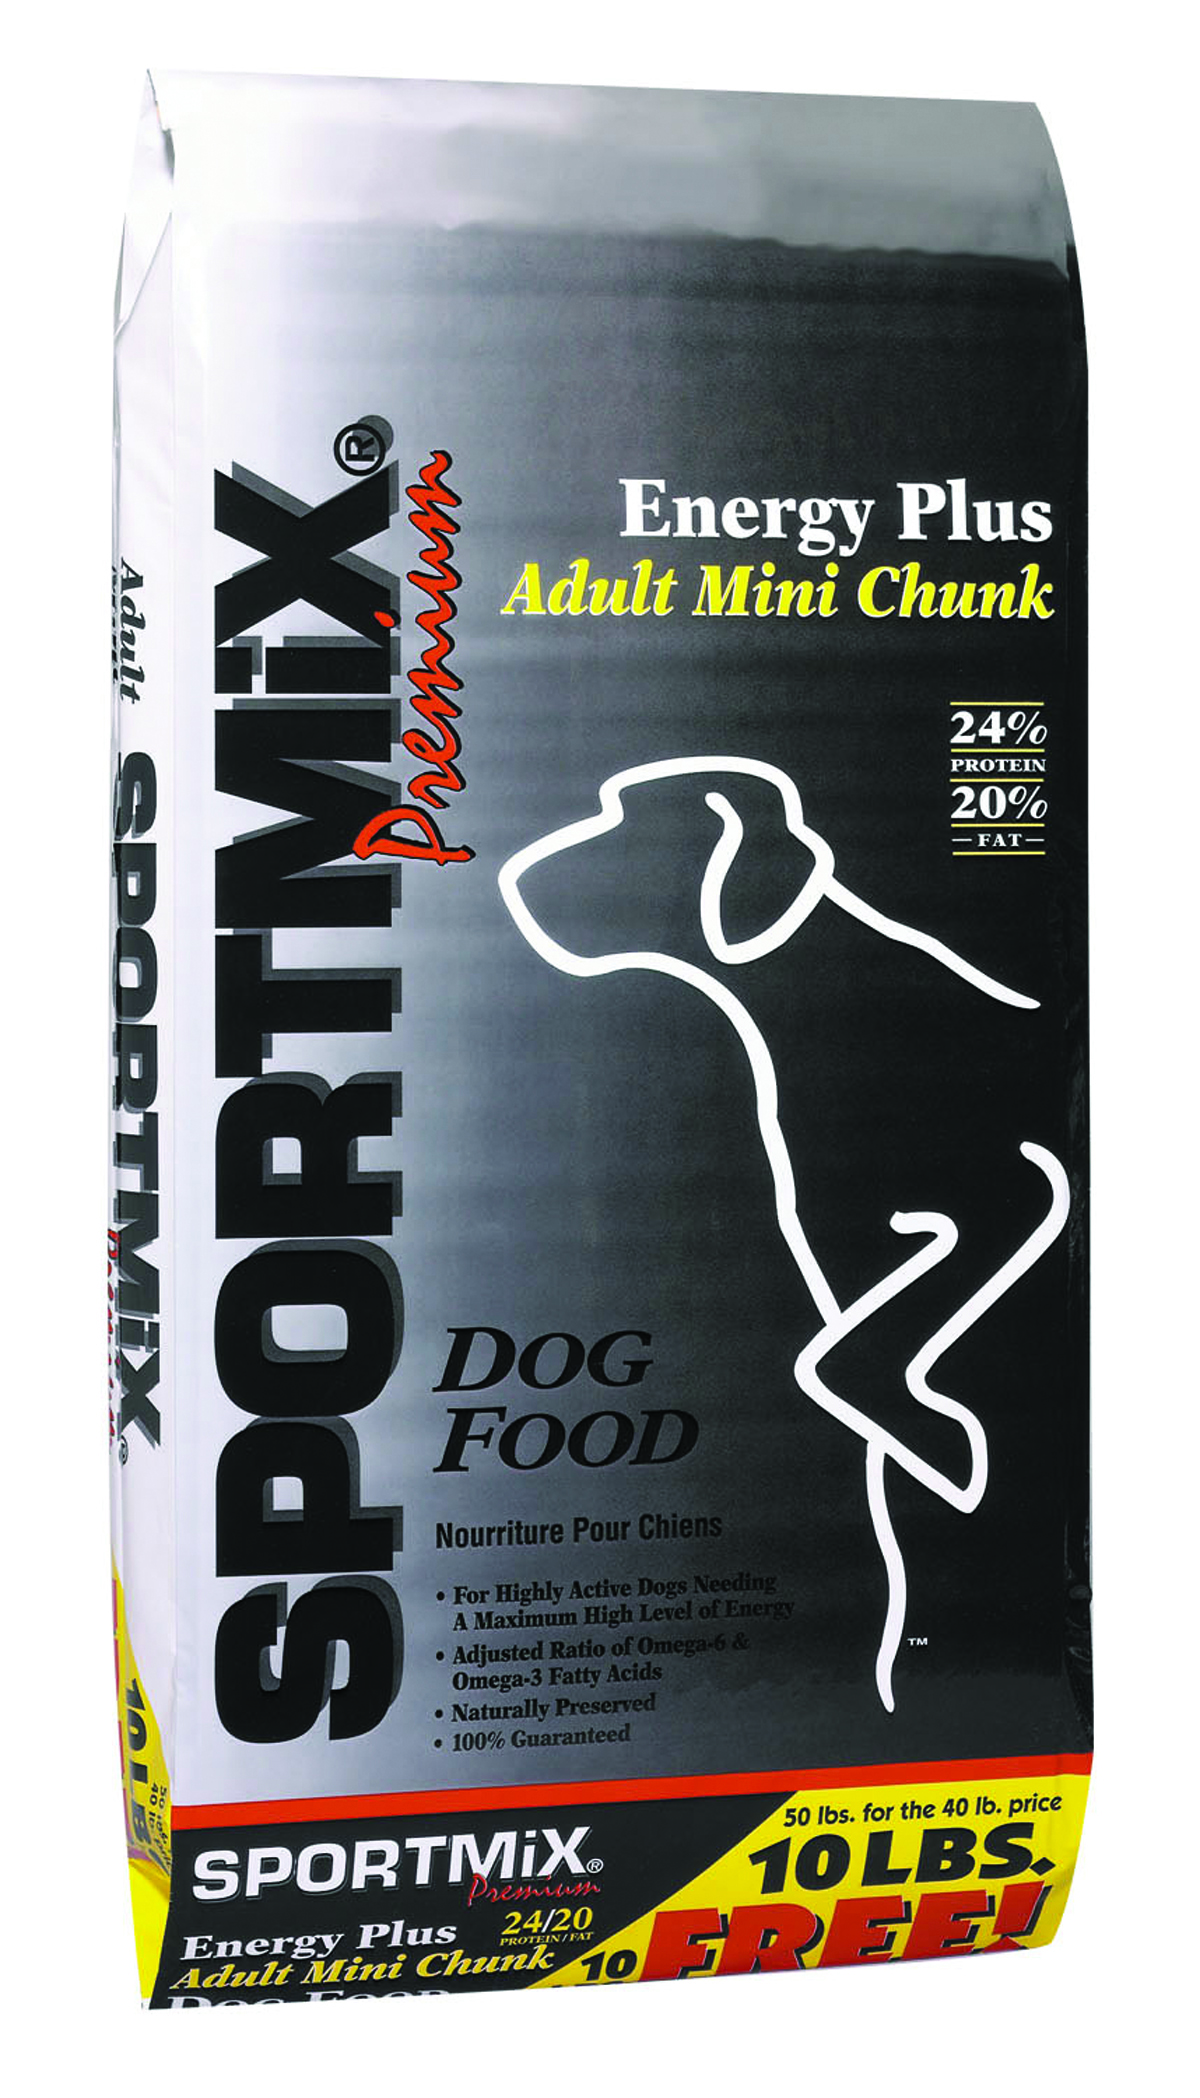 Sportmix Energy Plus Dog Food - 50lbs.